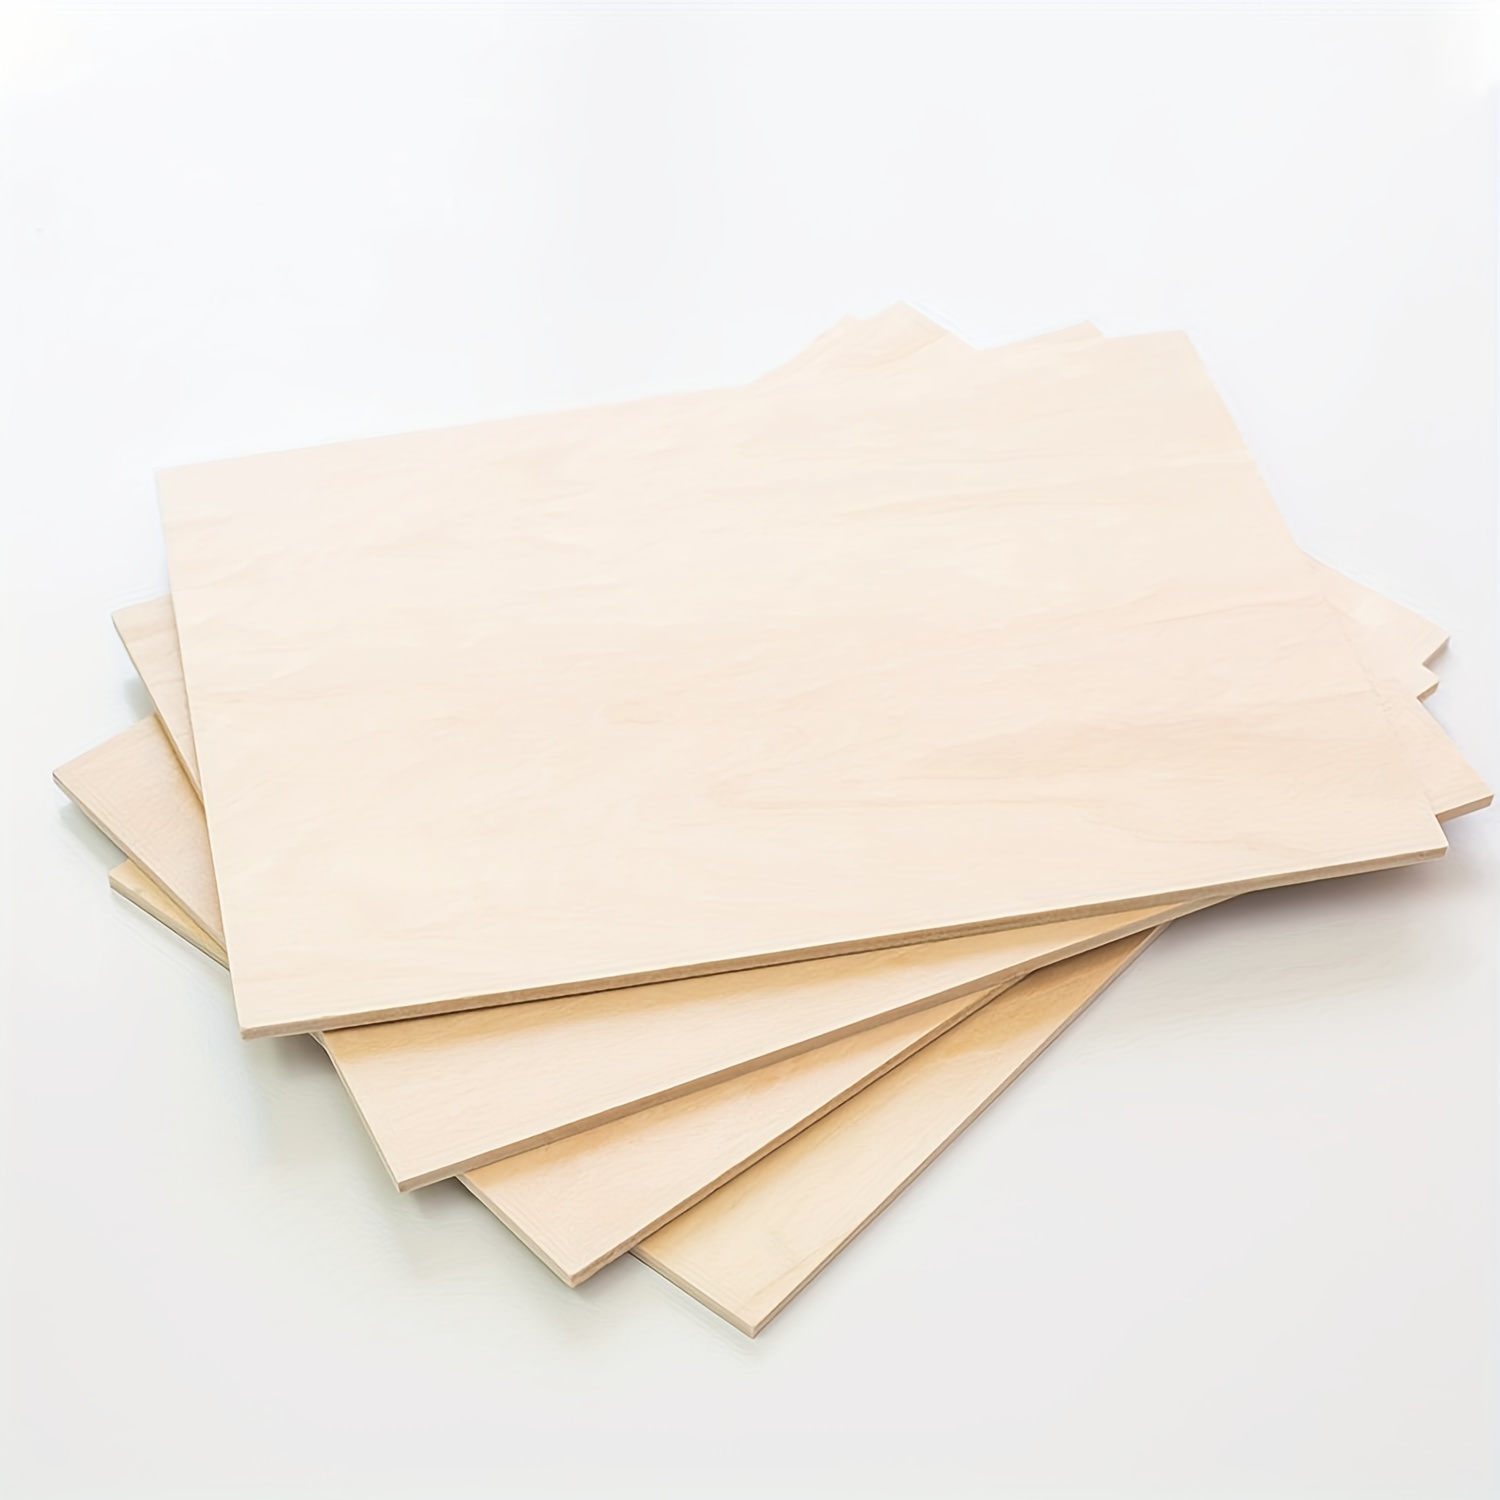 Pack of 5 thin balsa wood sheets, 300 x 200 x 2 mm, balsa wood